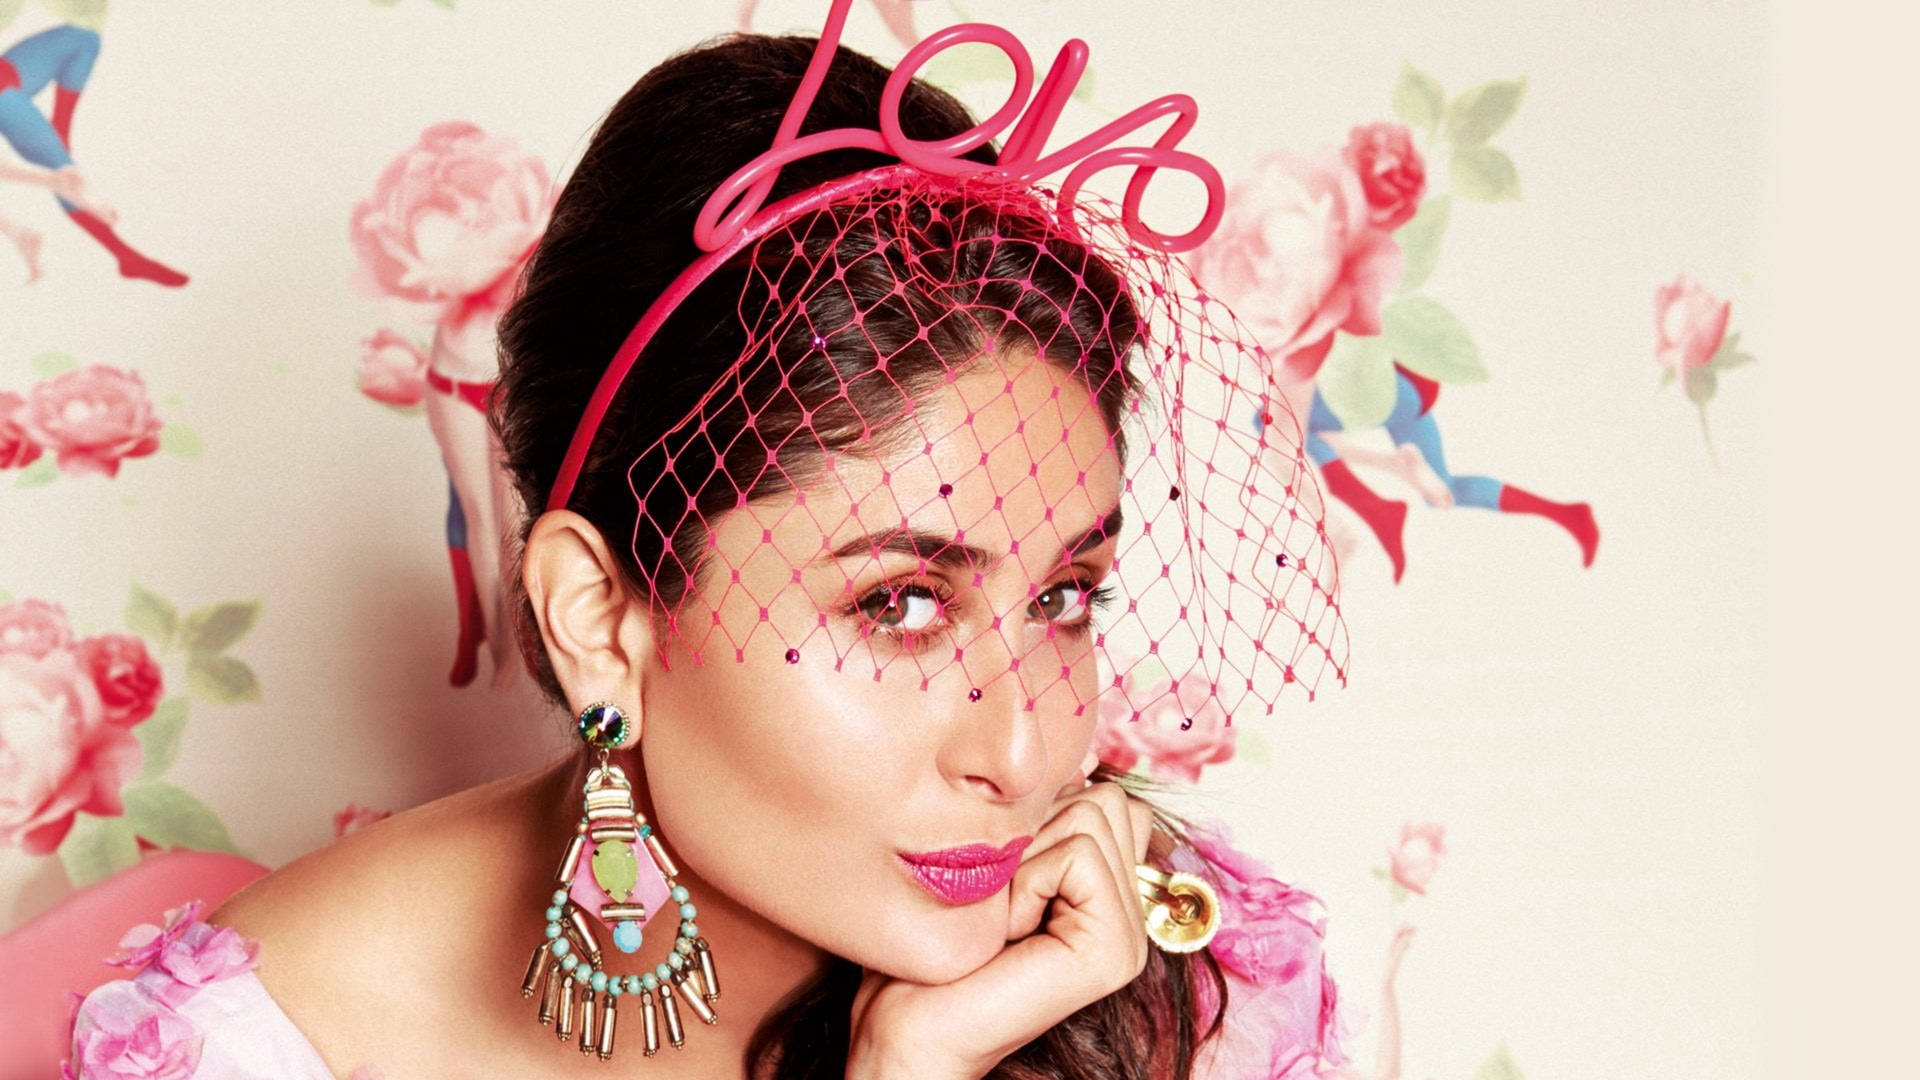 Girly Kareena Kapoor Vogue Photoshoot Background